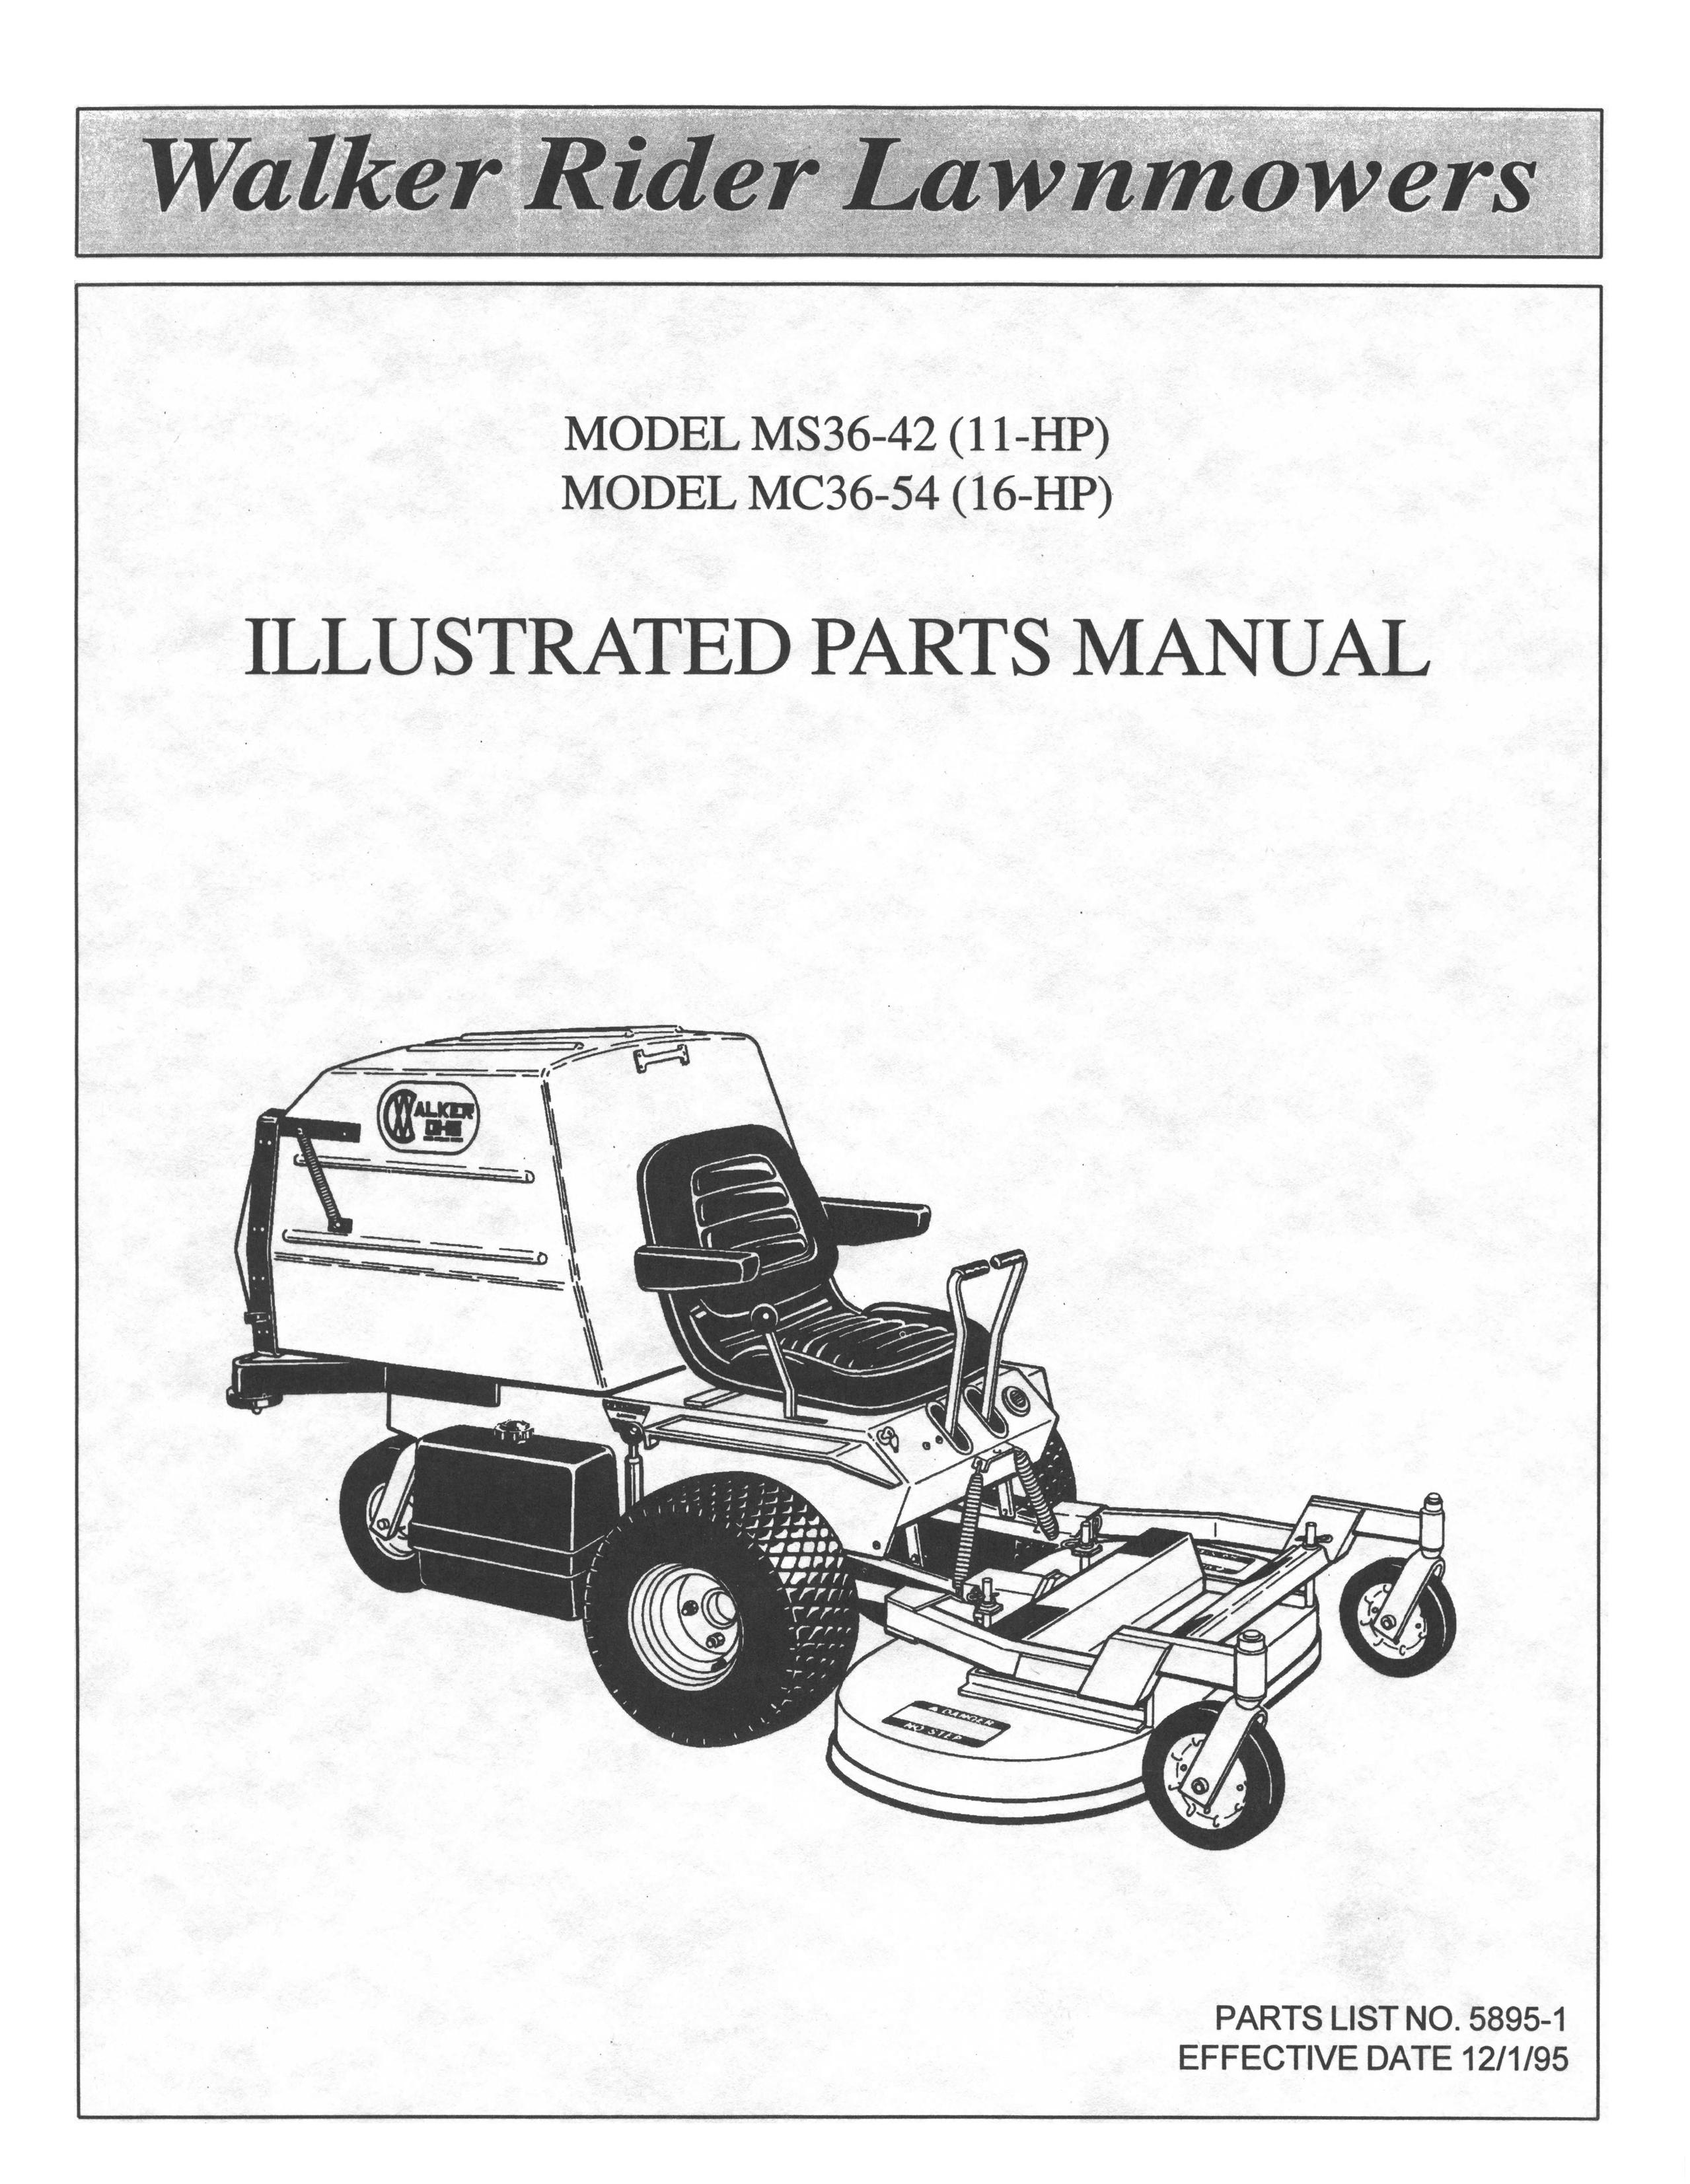 Walker MC36-54 Lawn Mower User Manual